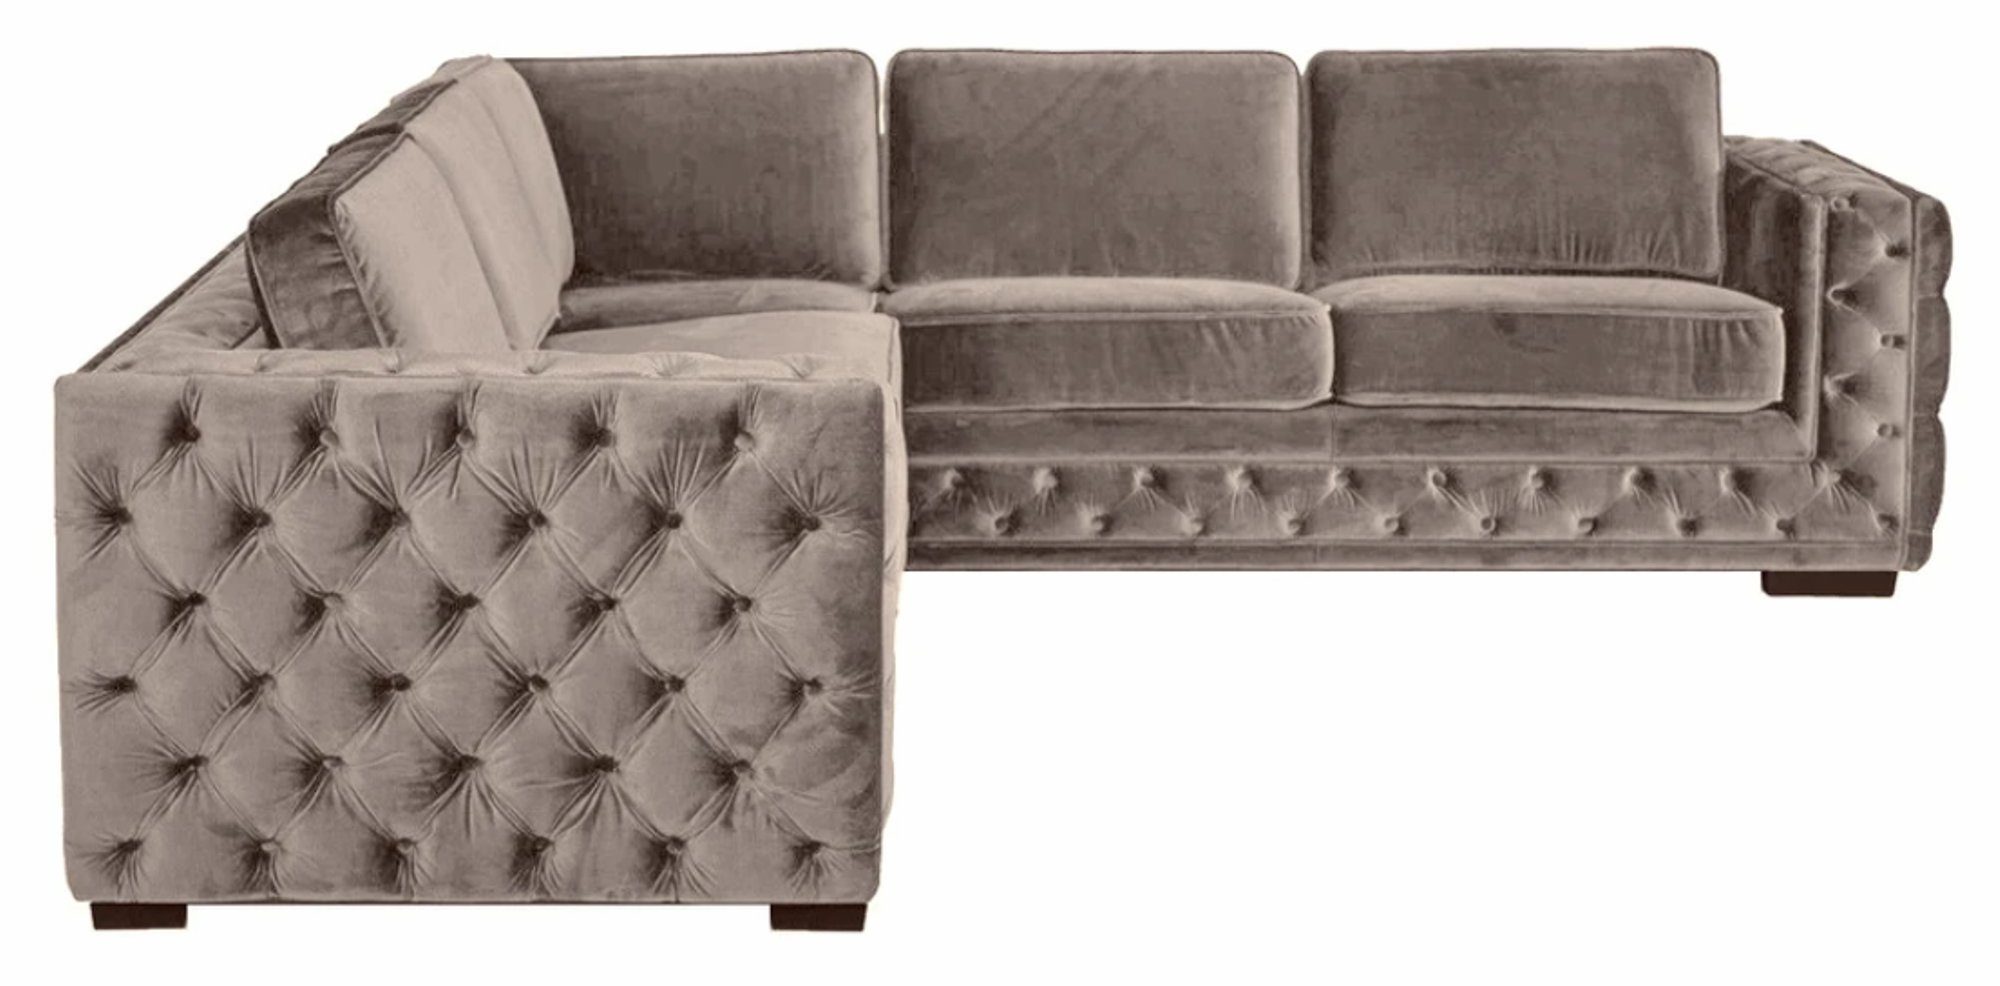 JVmoebel Ecksofa Chesterfield L-Form Sofa beige luxus Design, Made in Europe | Ecksofas